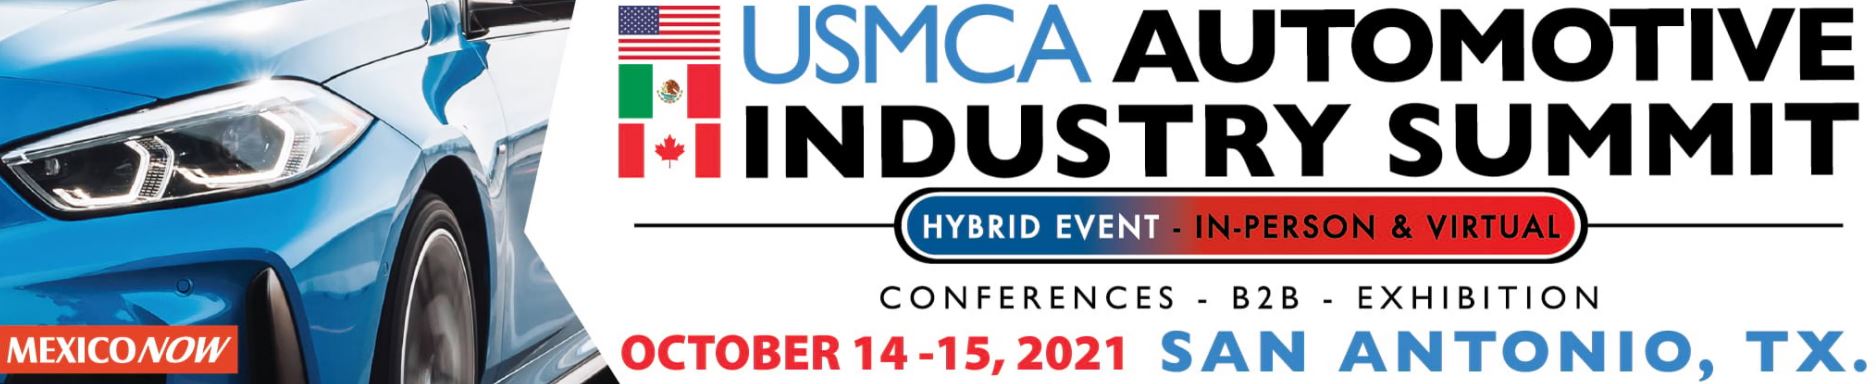 USMCA Automotive Industry Summit